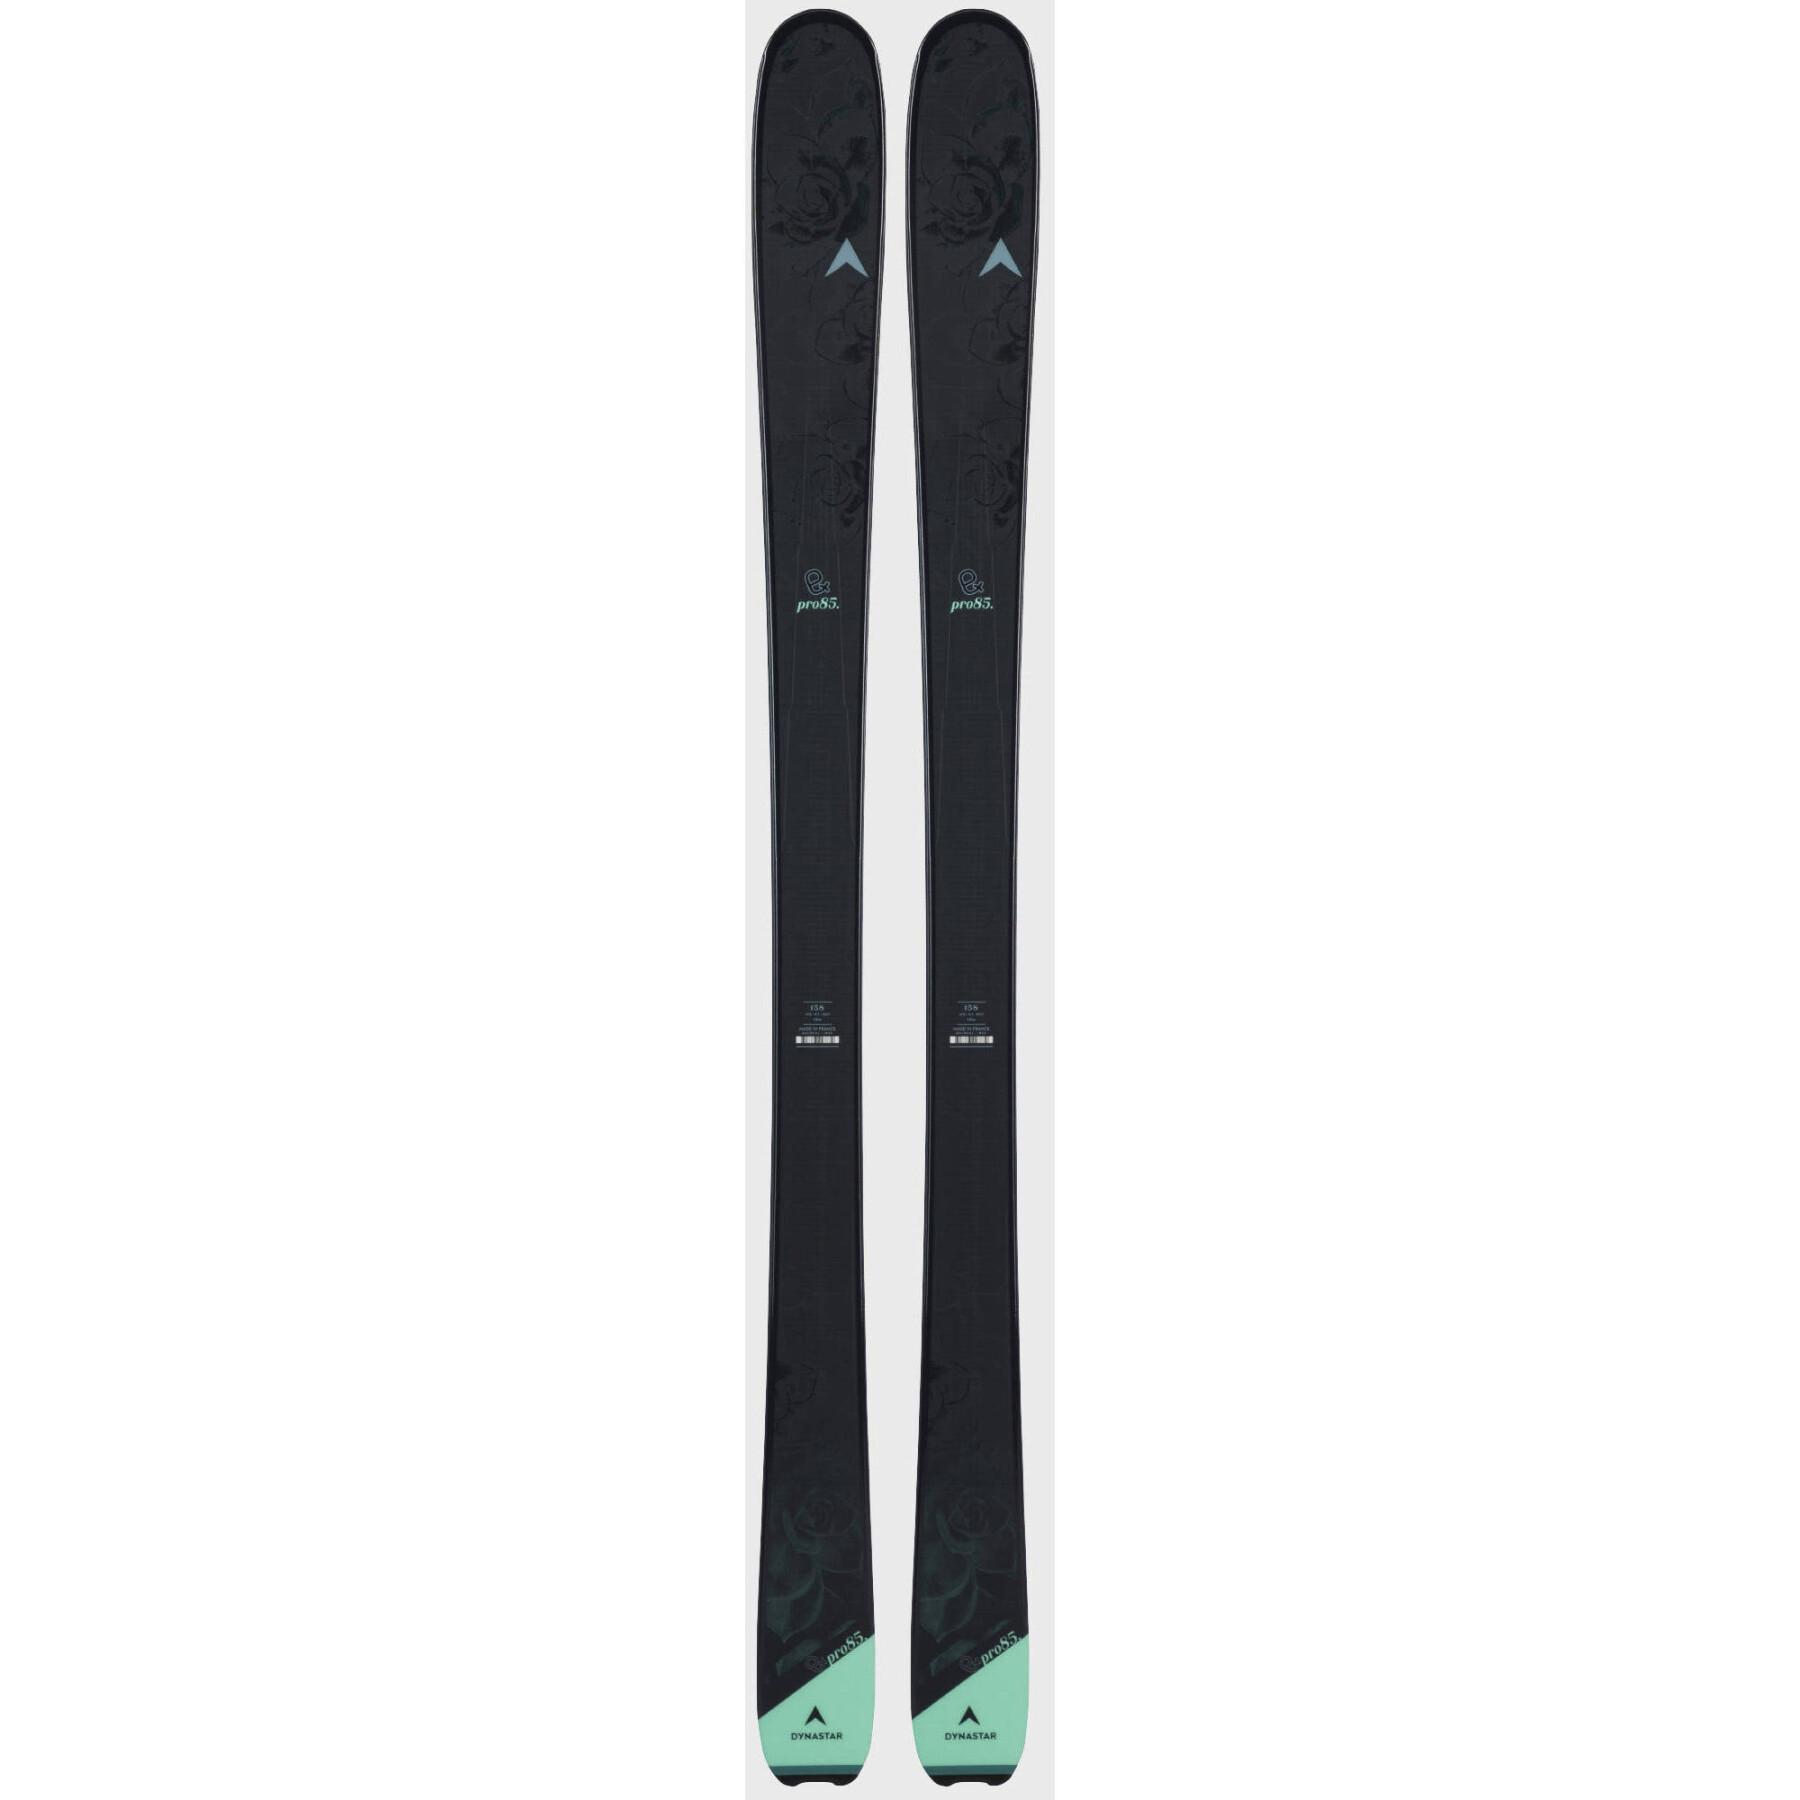 Ski without binding for women Dynastar E-Pro 85 Open